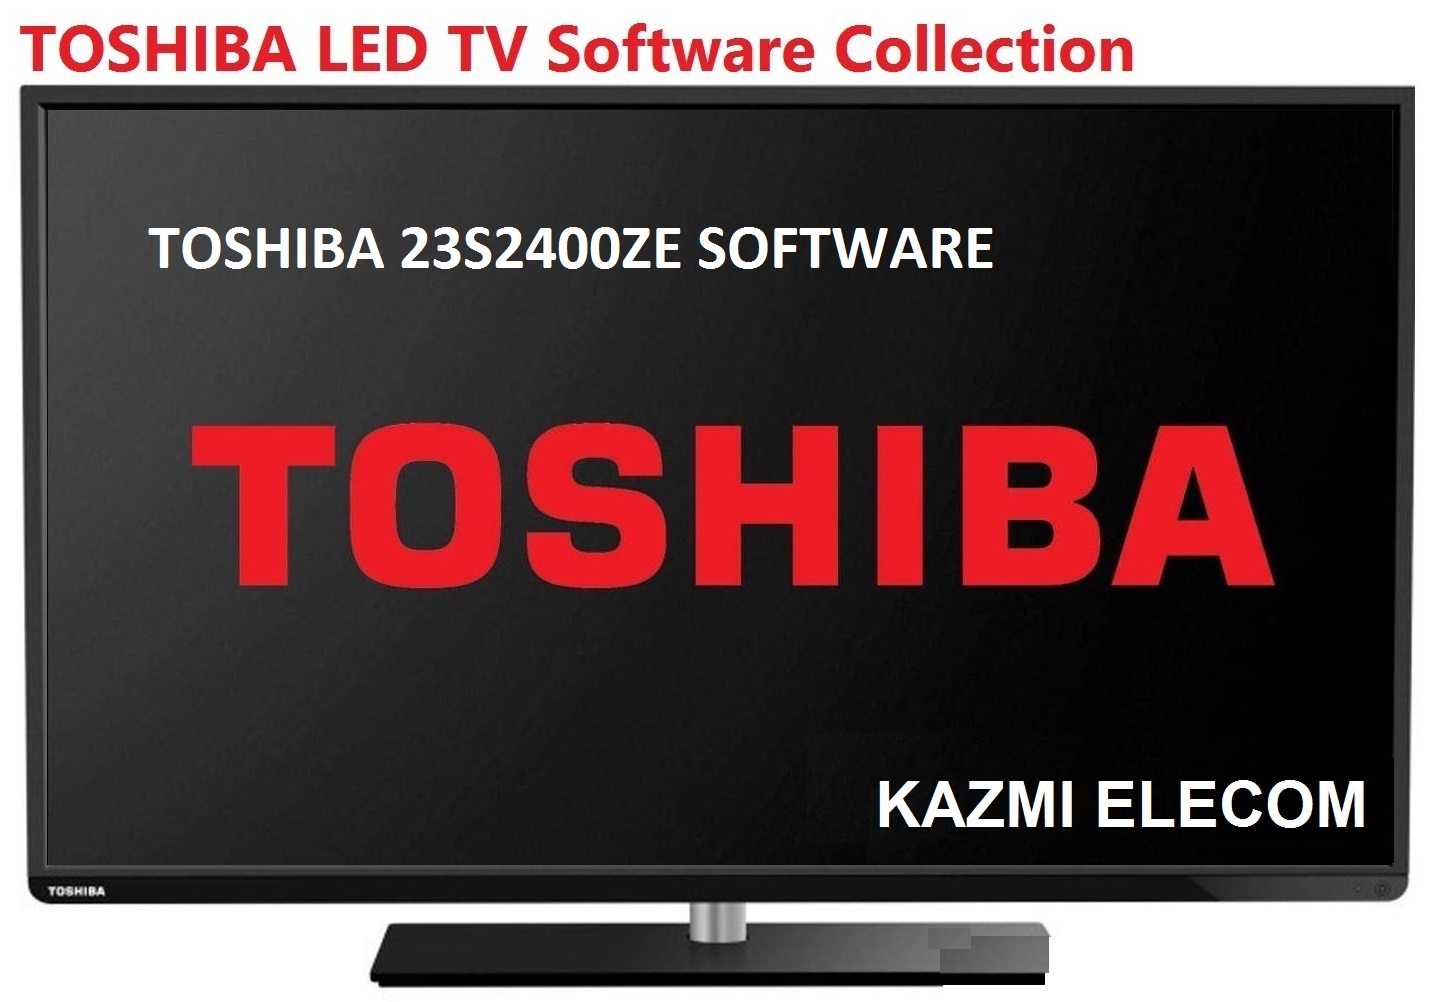 Toshiba 23S2400Ze